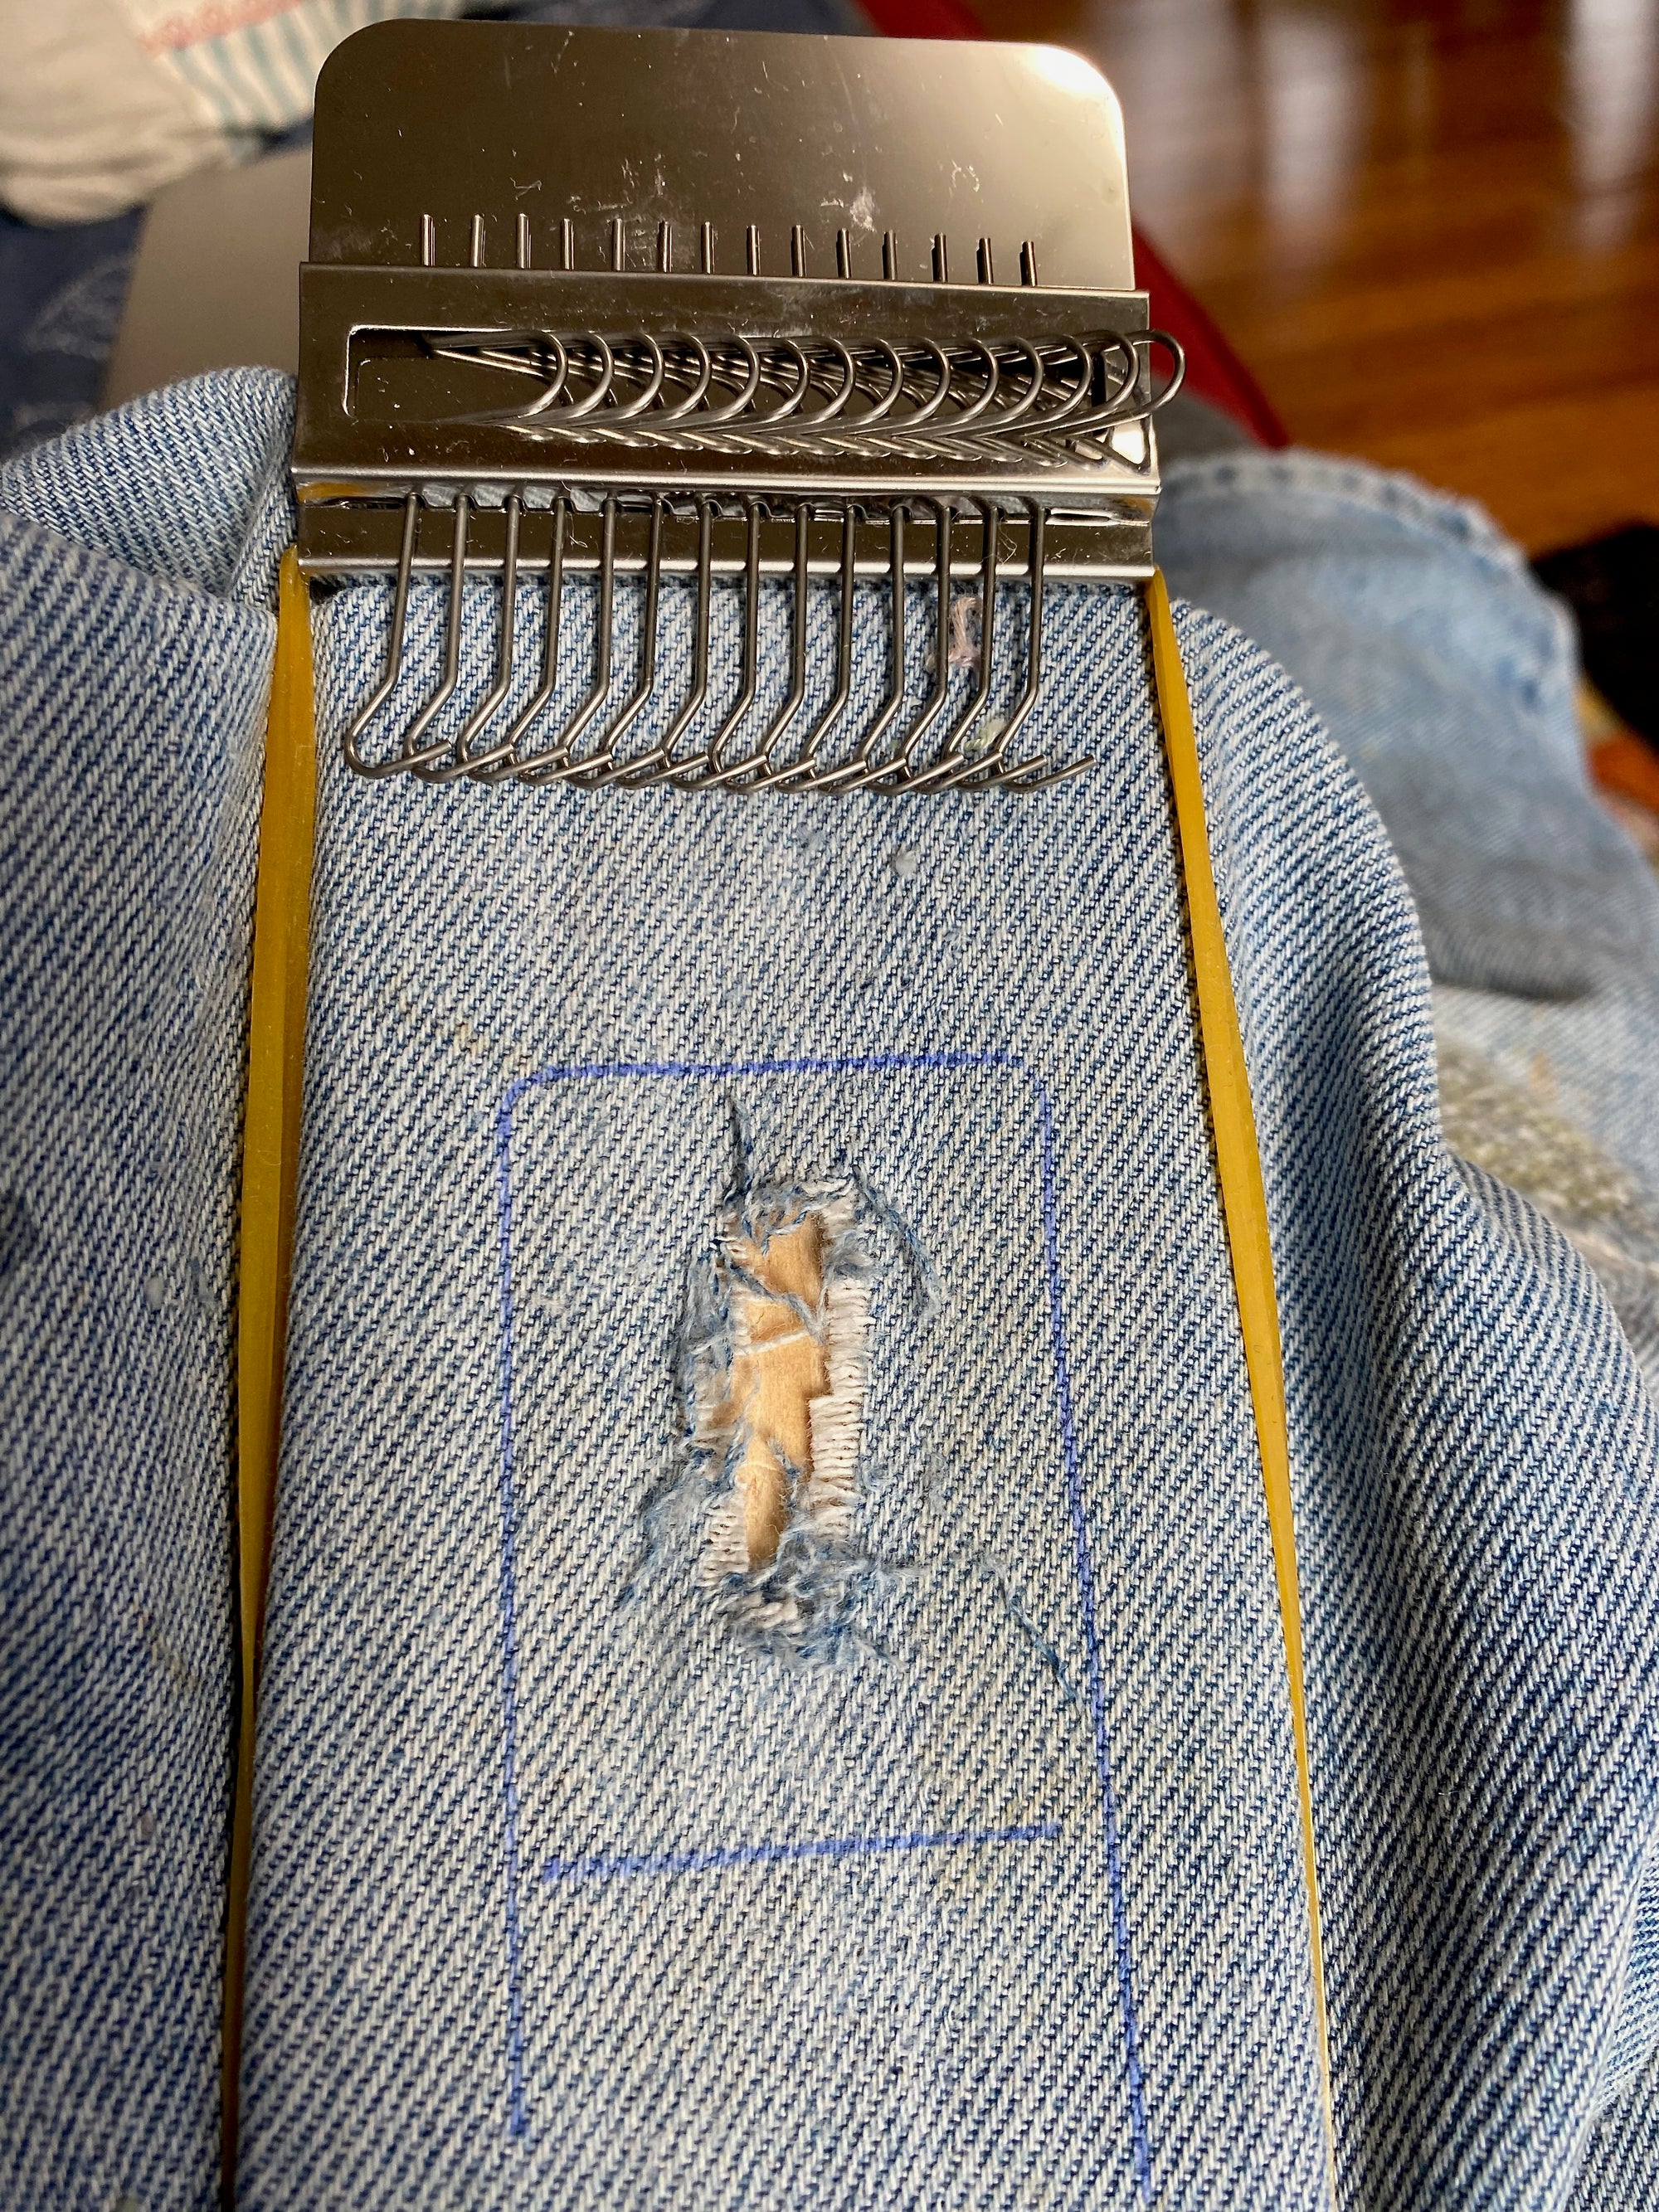 long speedweve style mending loom on  being used to repair blue jeans